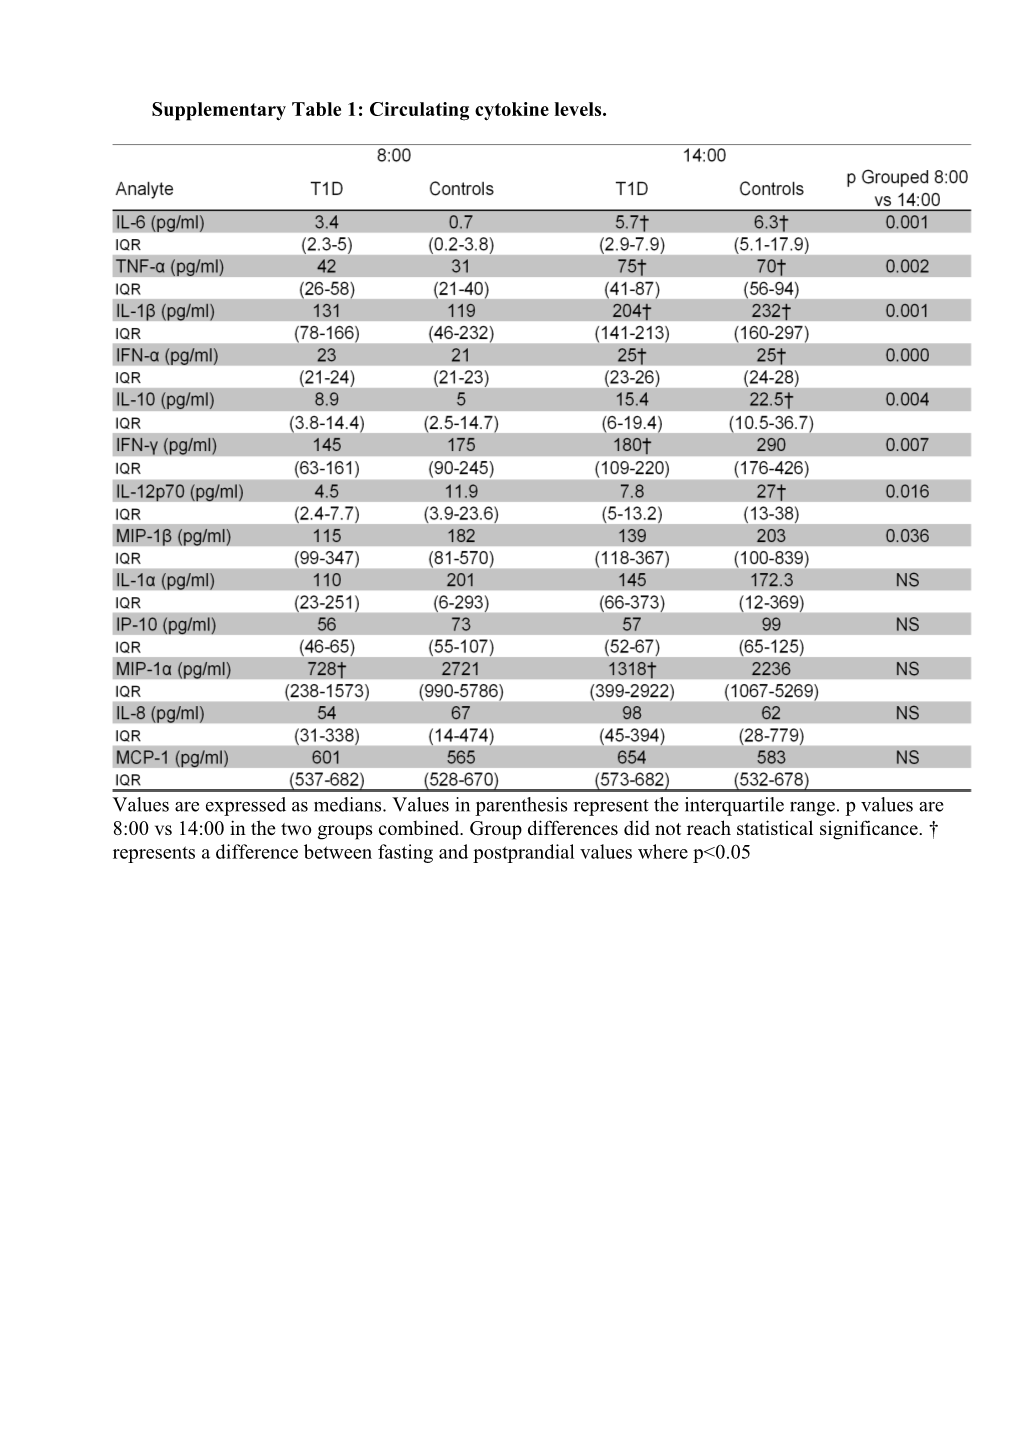 Supplementary Table 1: Circulating Cytokine Levels